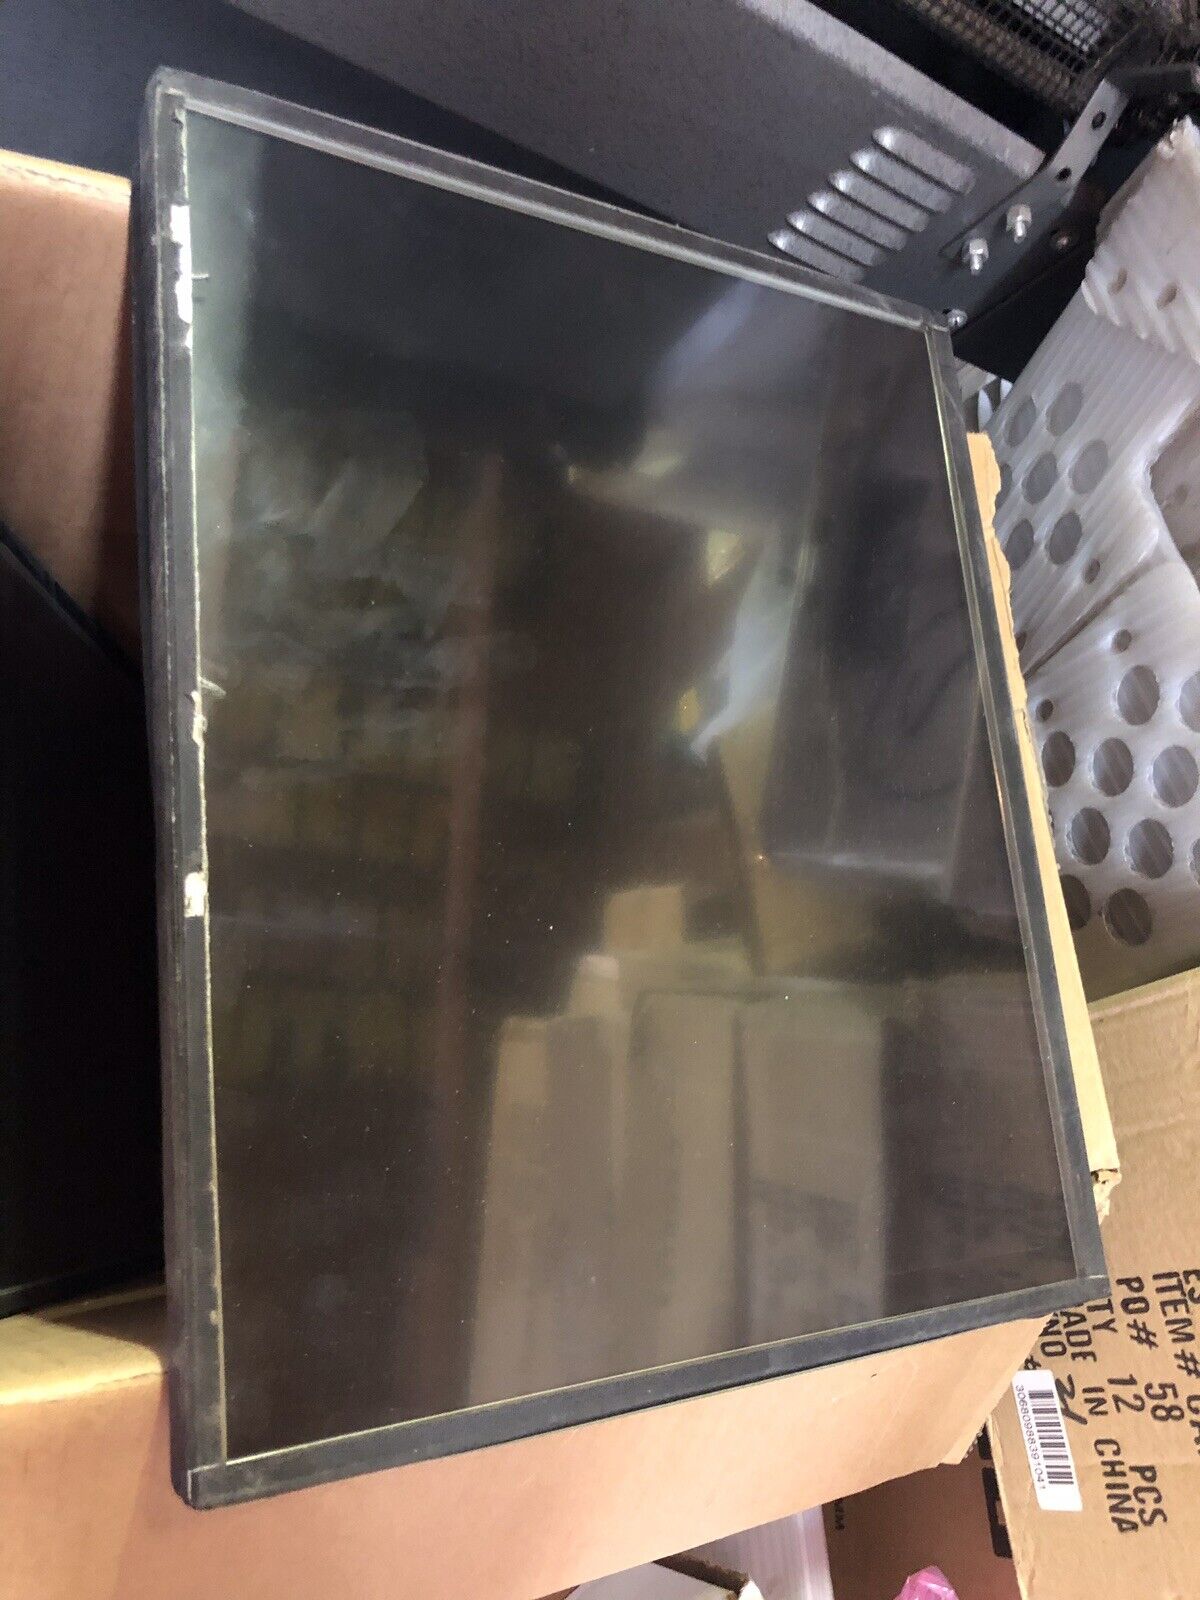 Original Samsung LTM170E8-L01 LCD USA Seller